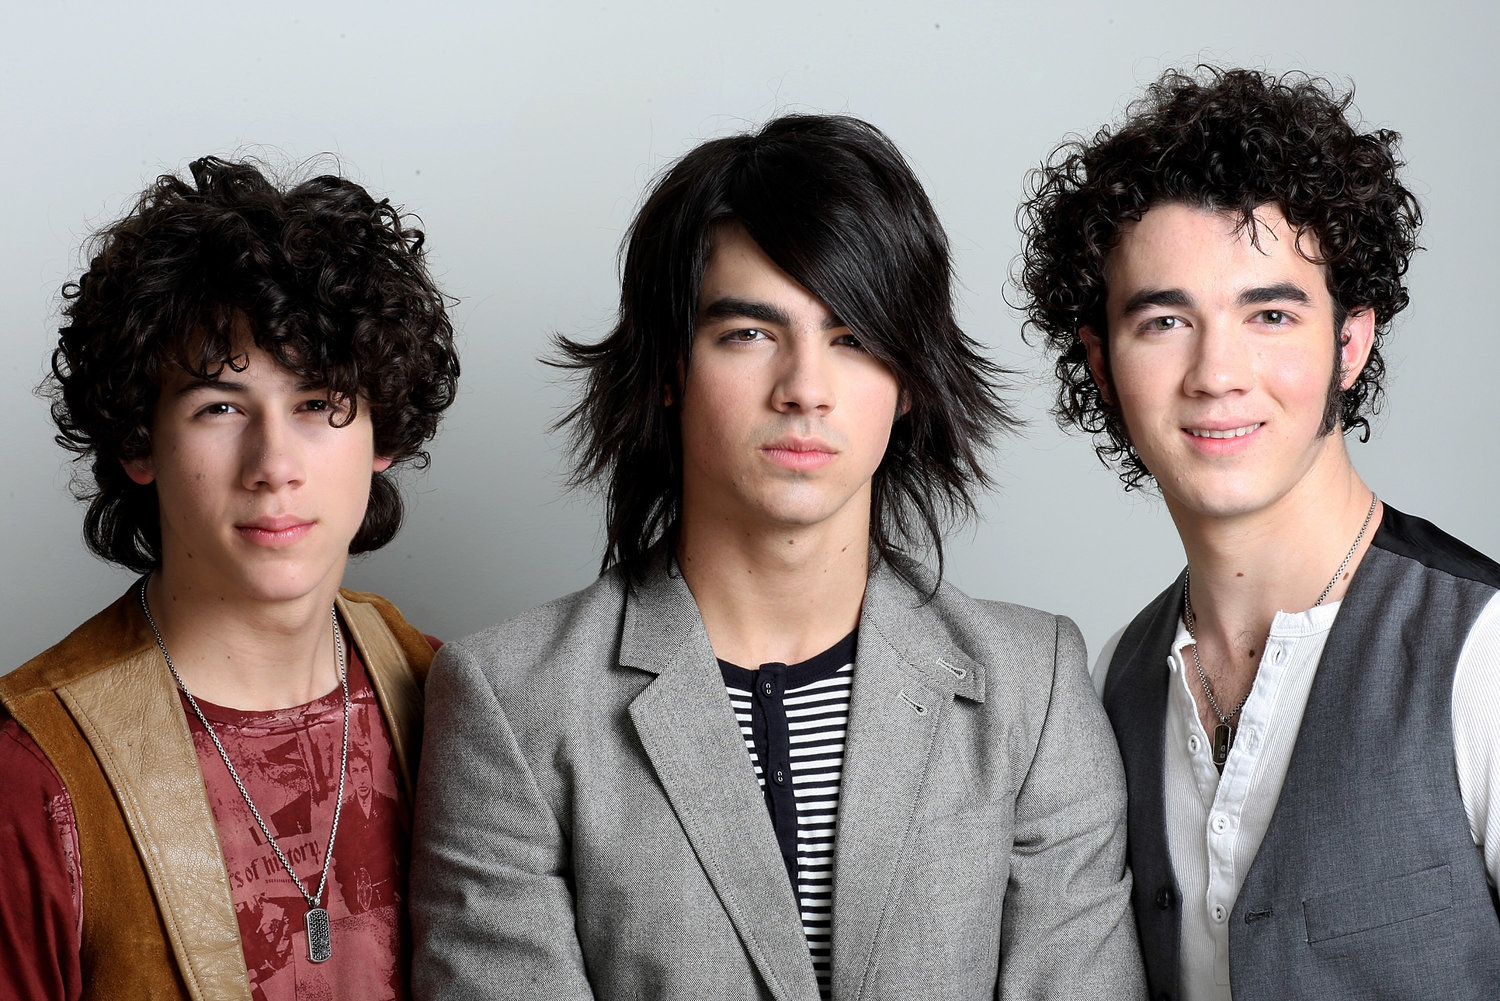 Jonas Brothers, It's Been a Blast — Jessica Morris